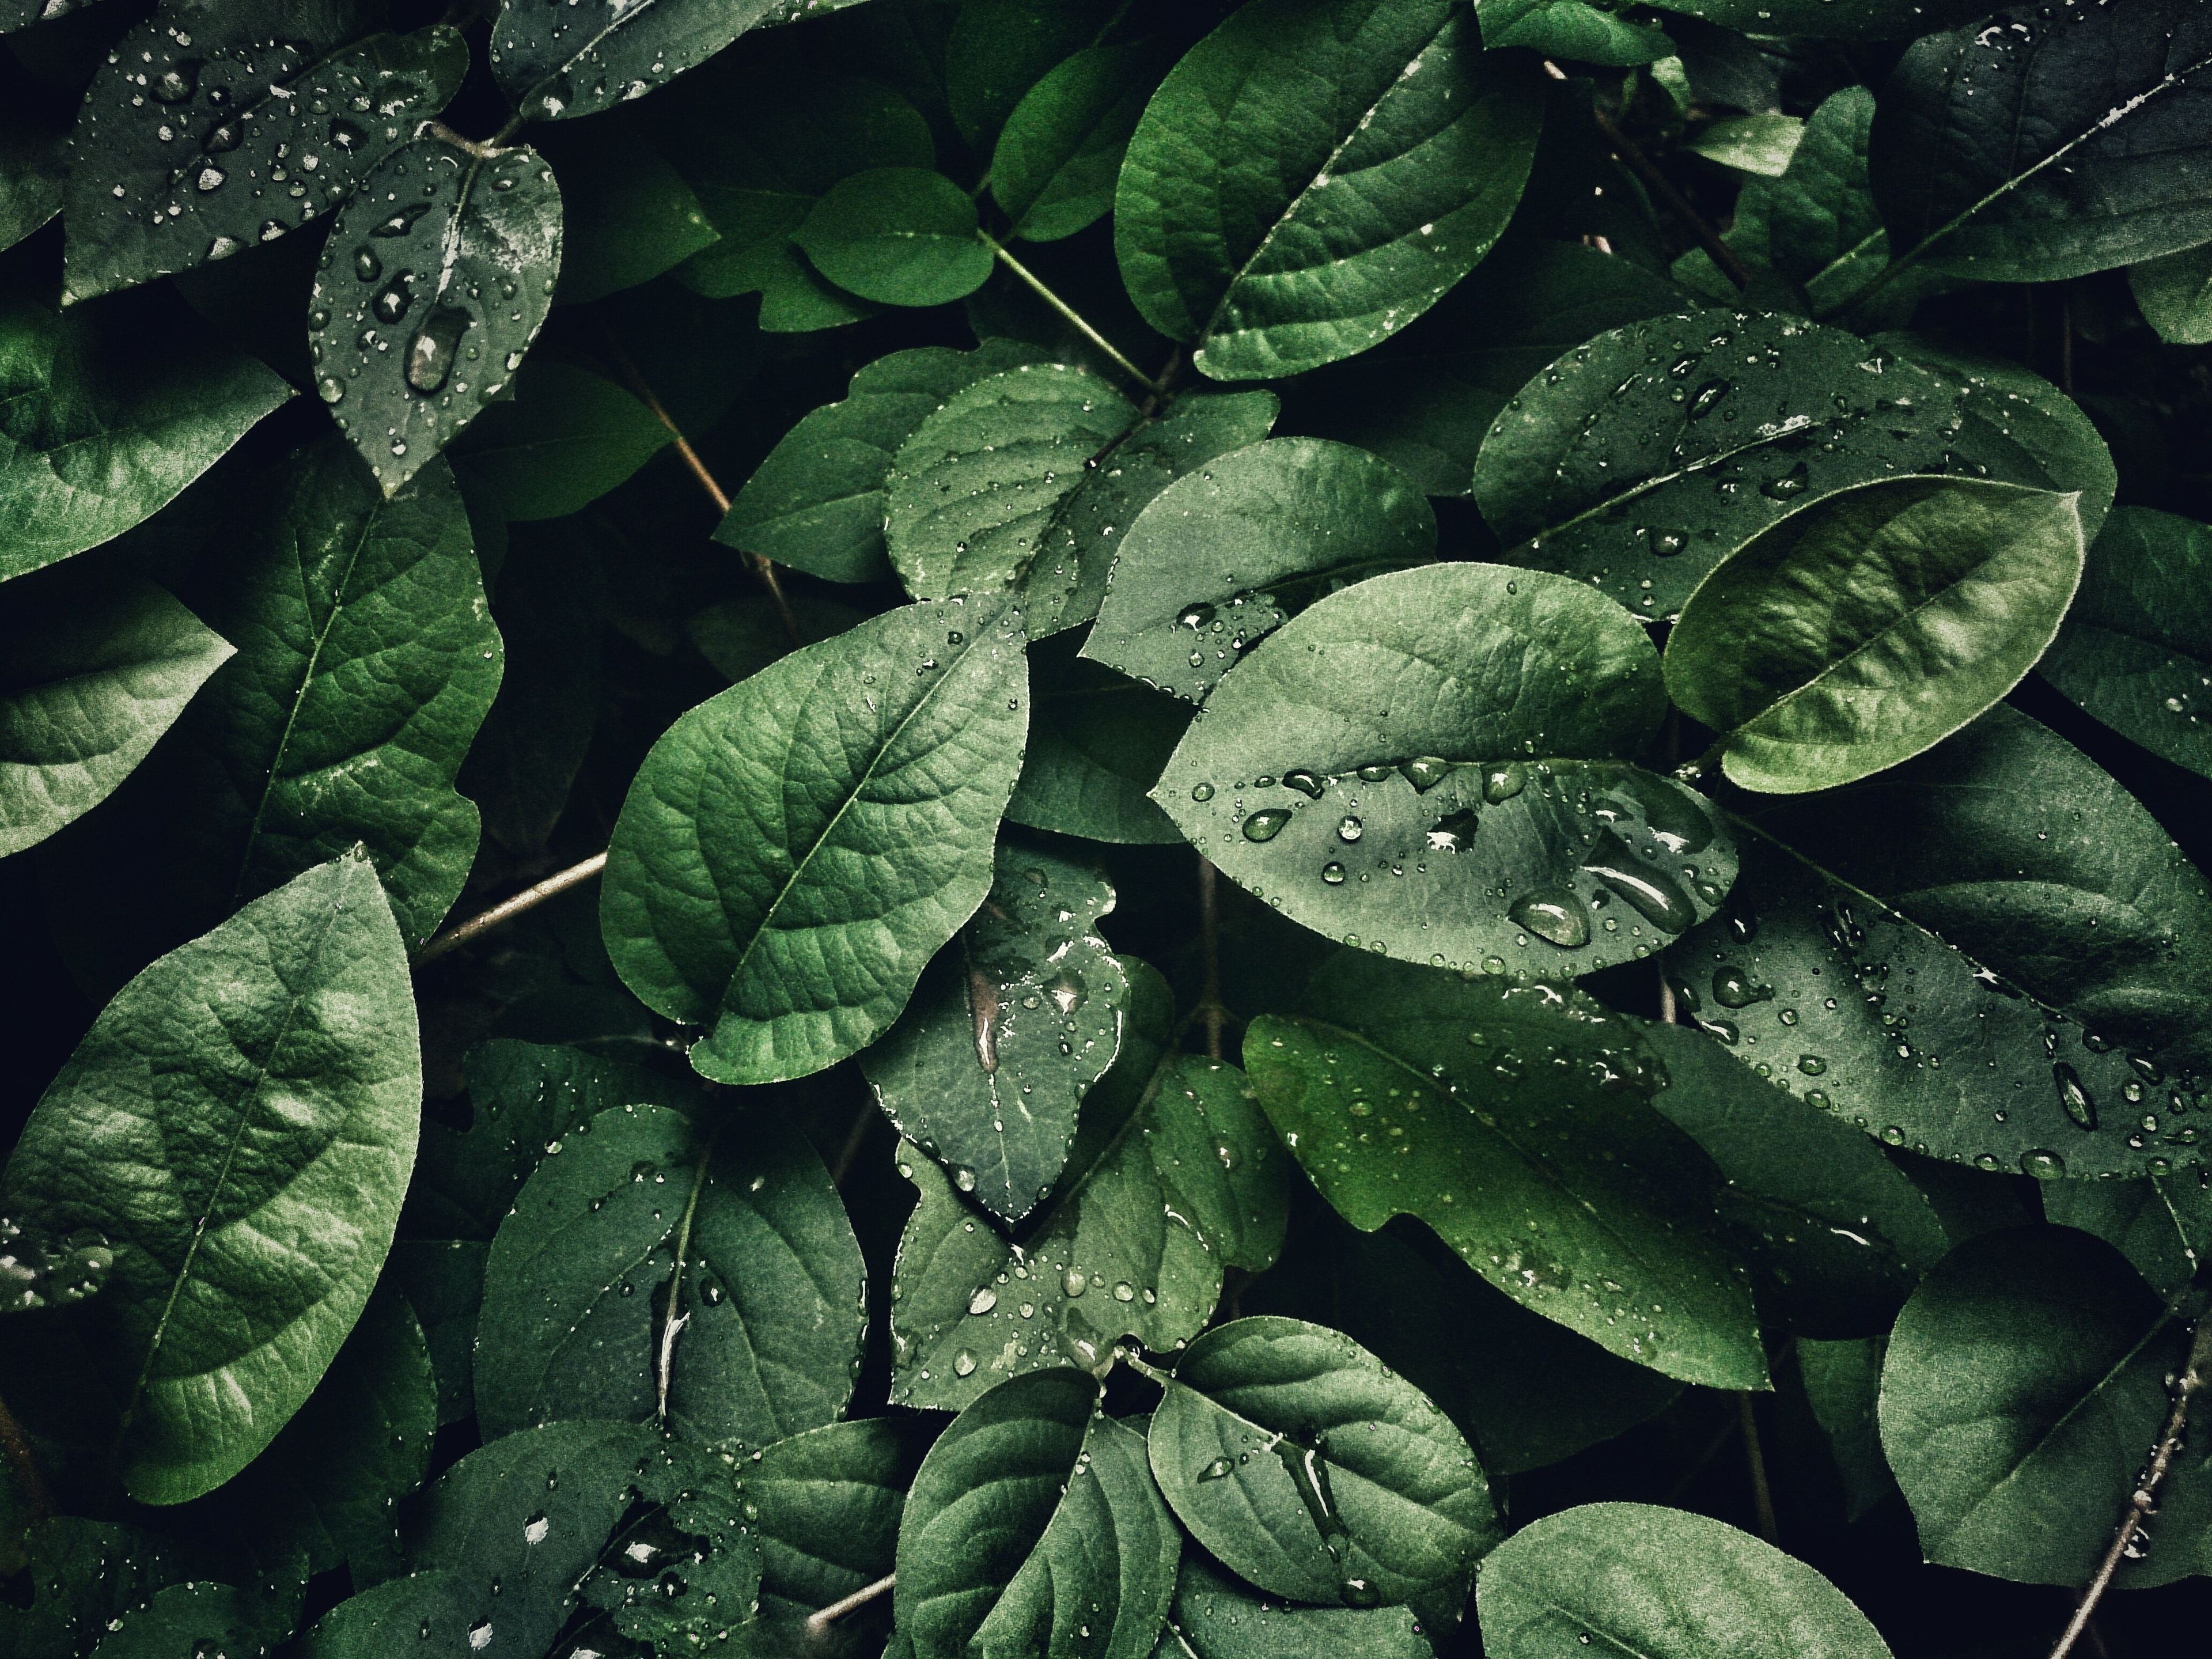 Freshly rained on leaves